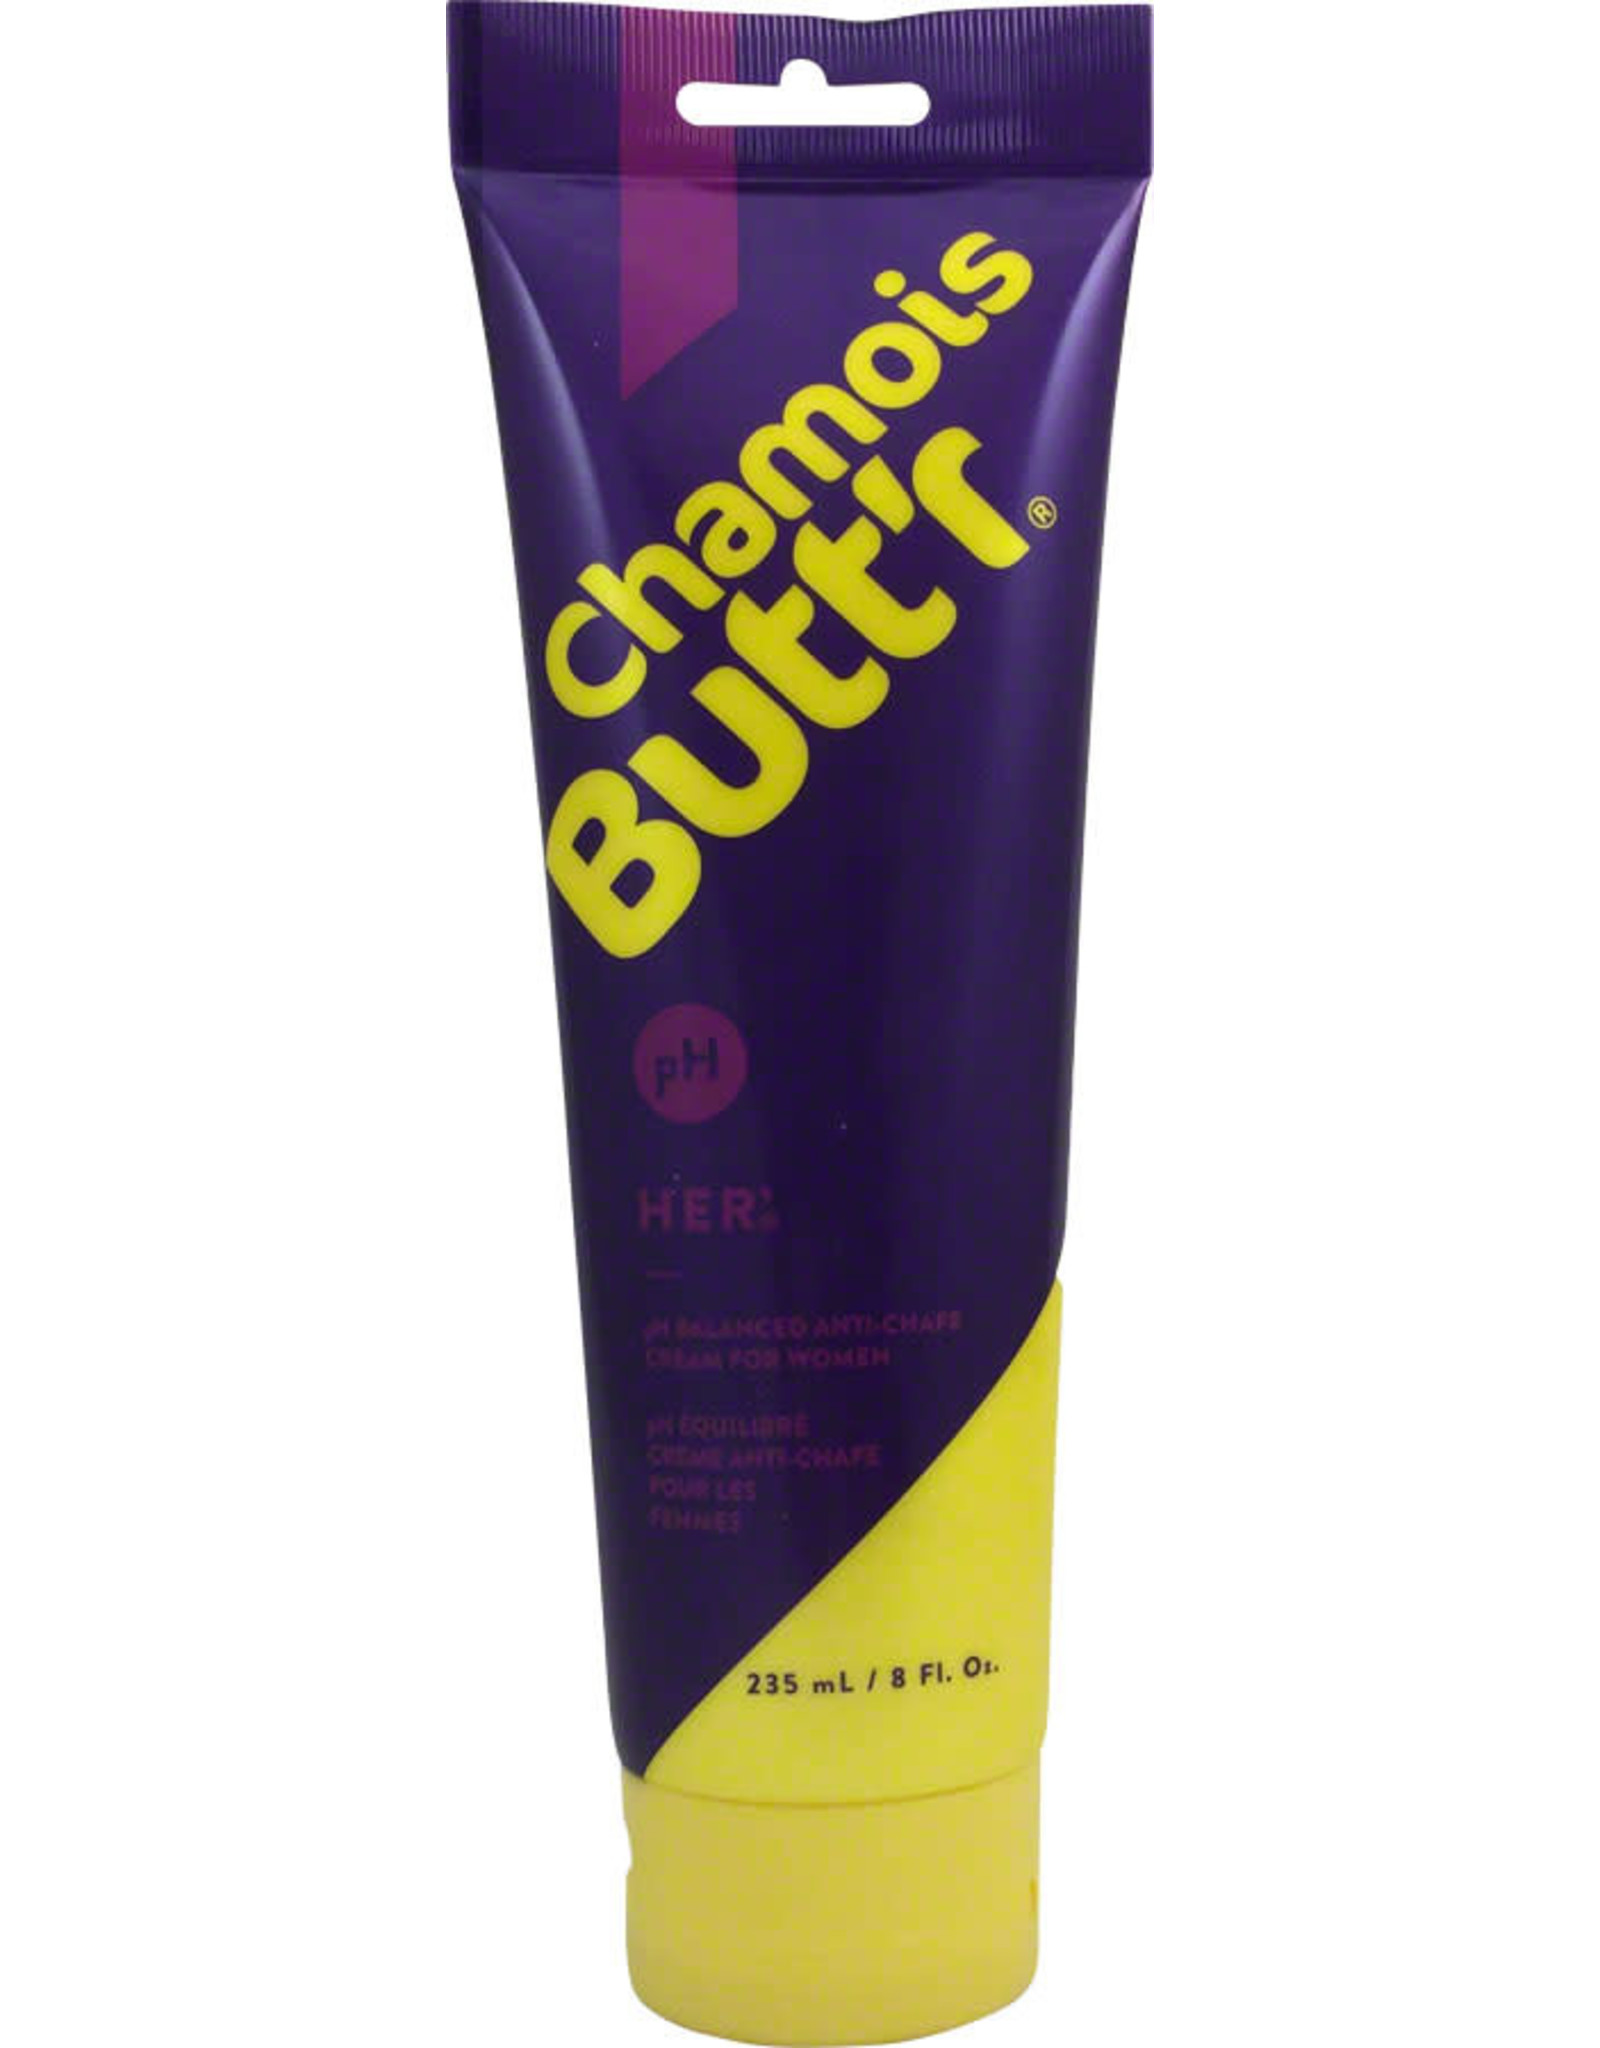 Chamois Butt'r Chamois Butt'r Her', 8oz Tube, Each